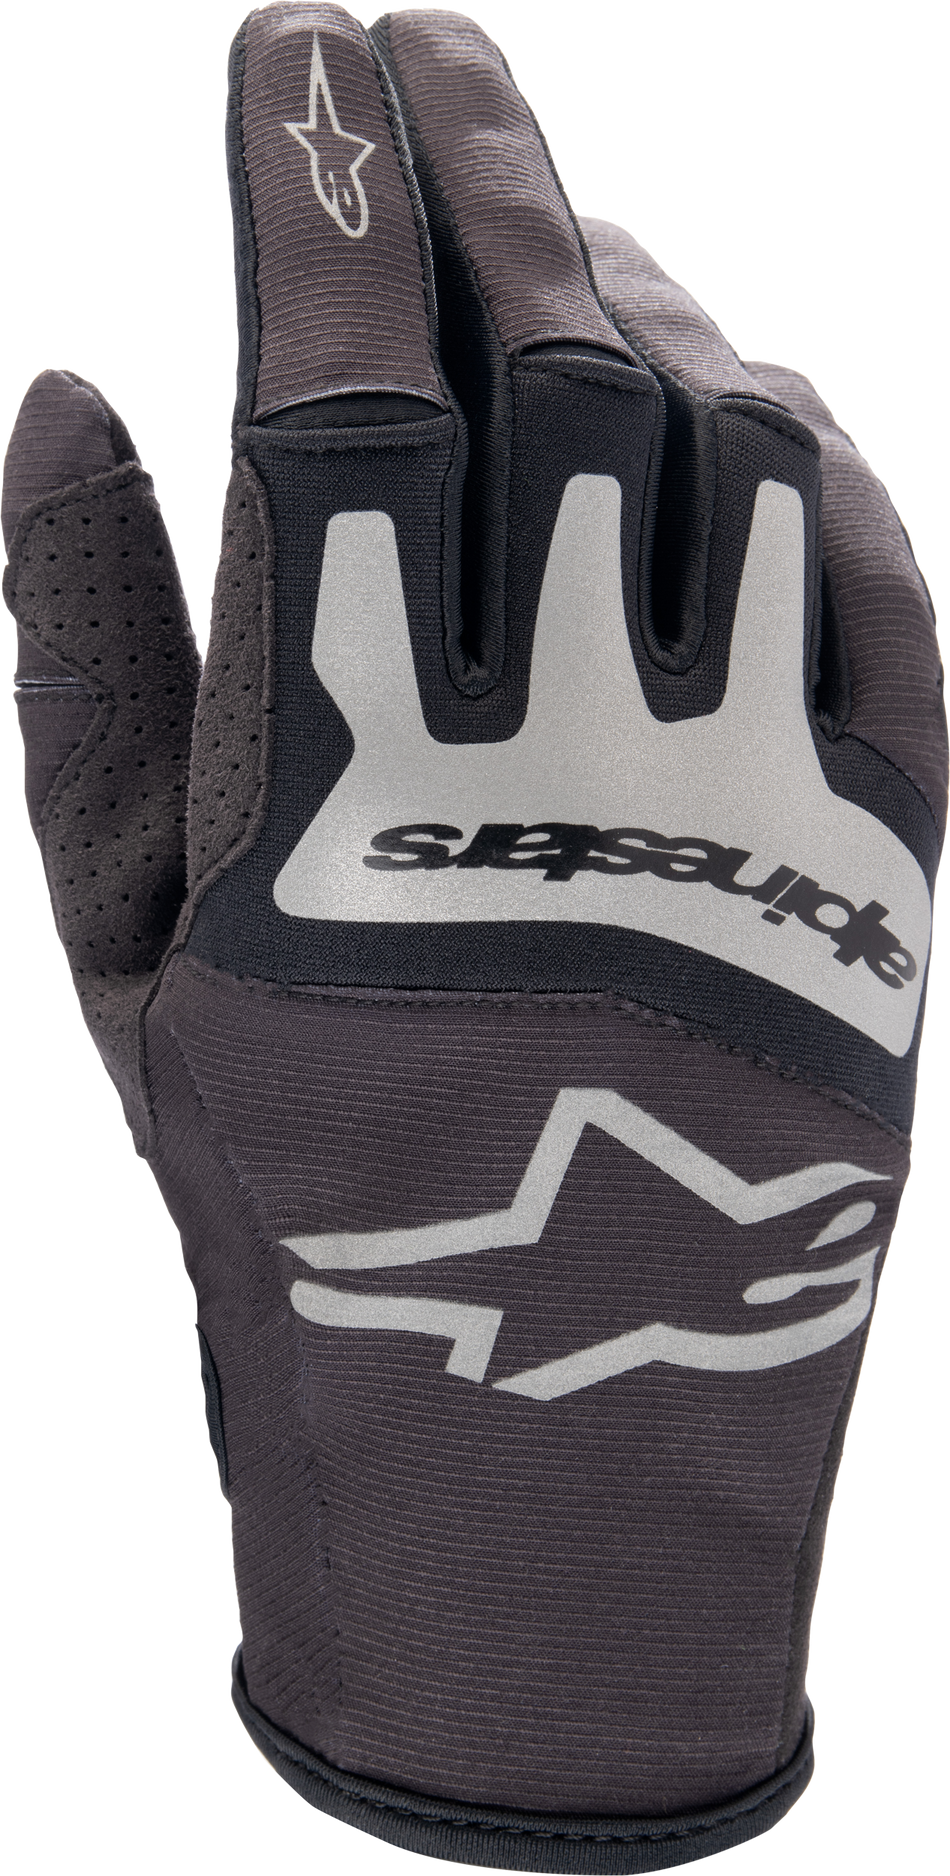 ALPINESTARS Techstar Gloves Black/Brushed Silver Md 3561023-1419-M